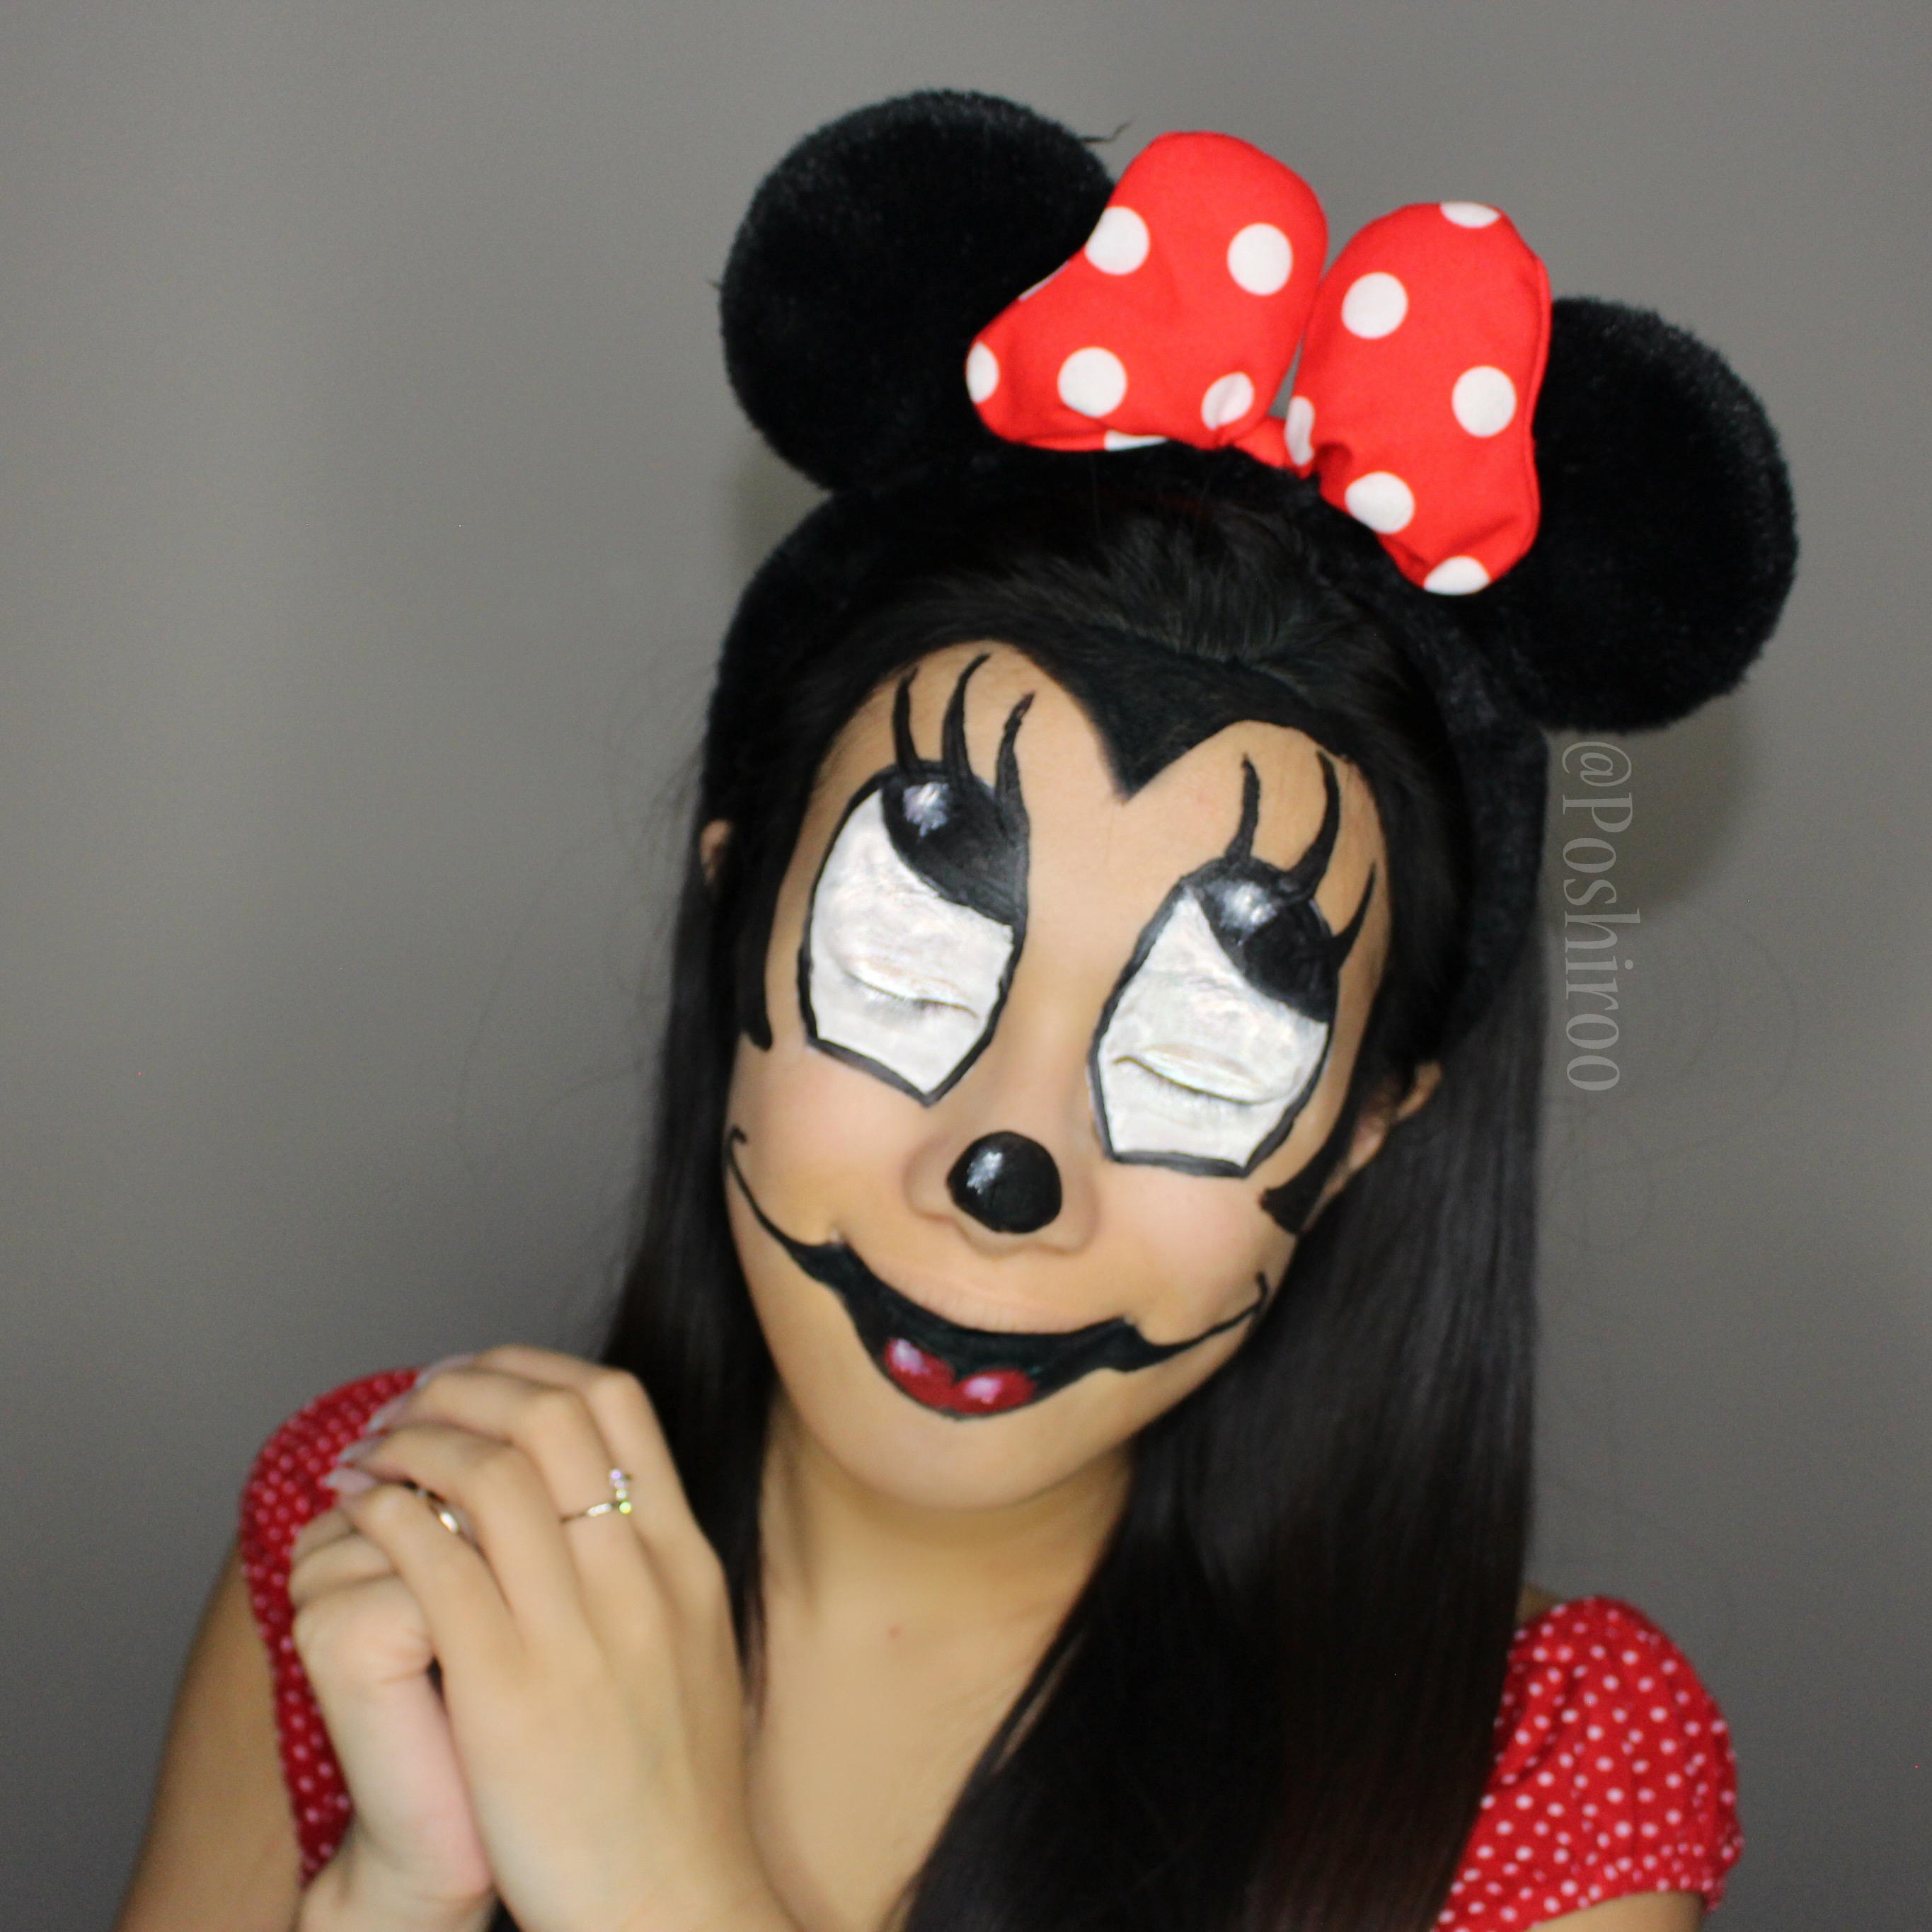 Minnie Mouse Eye Makeup Creepy Or Cute Minnie Mouse Halloween Makeup Imgur